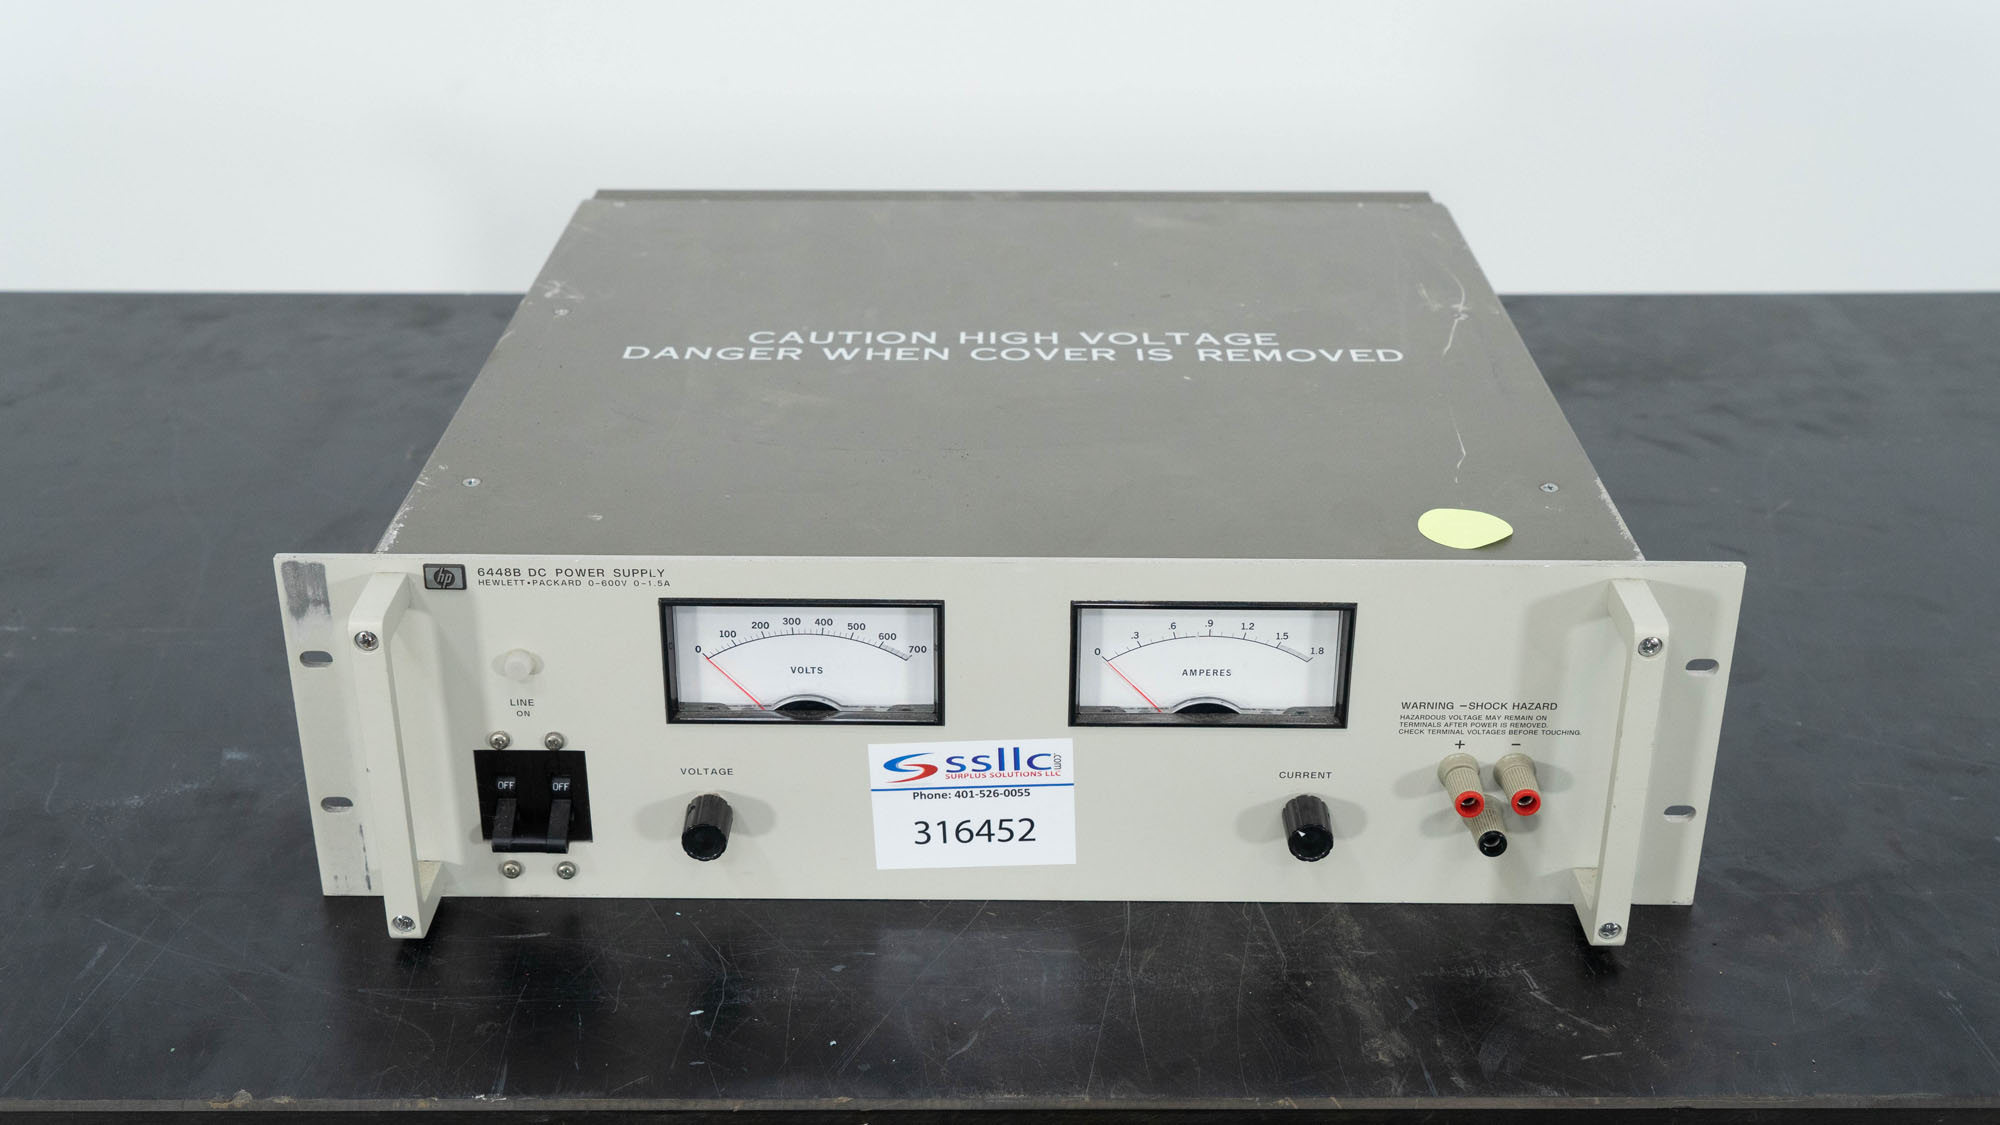 HP Power Supply, Model 6448B